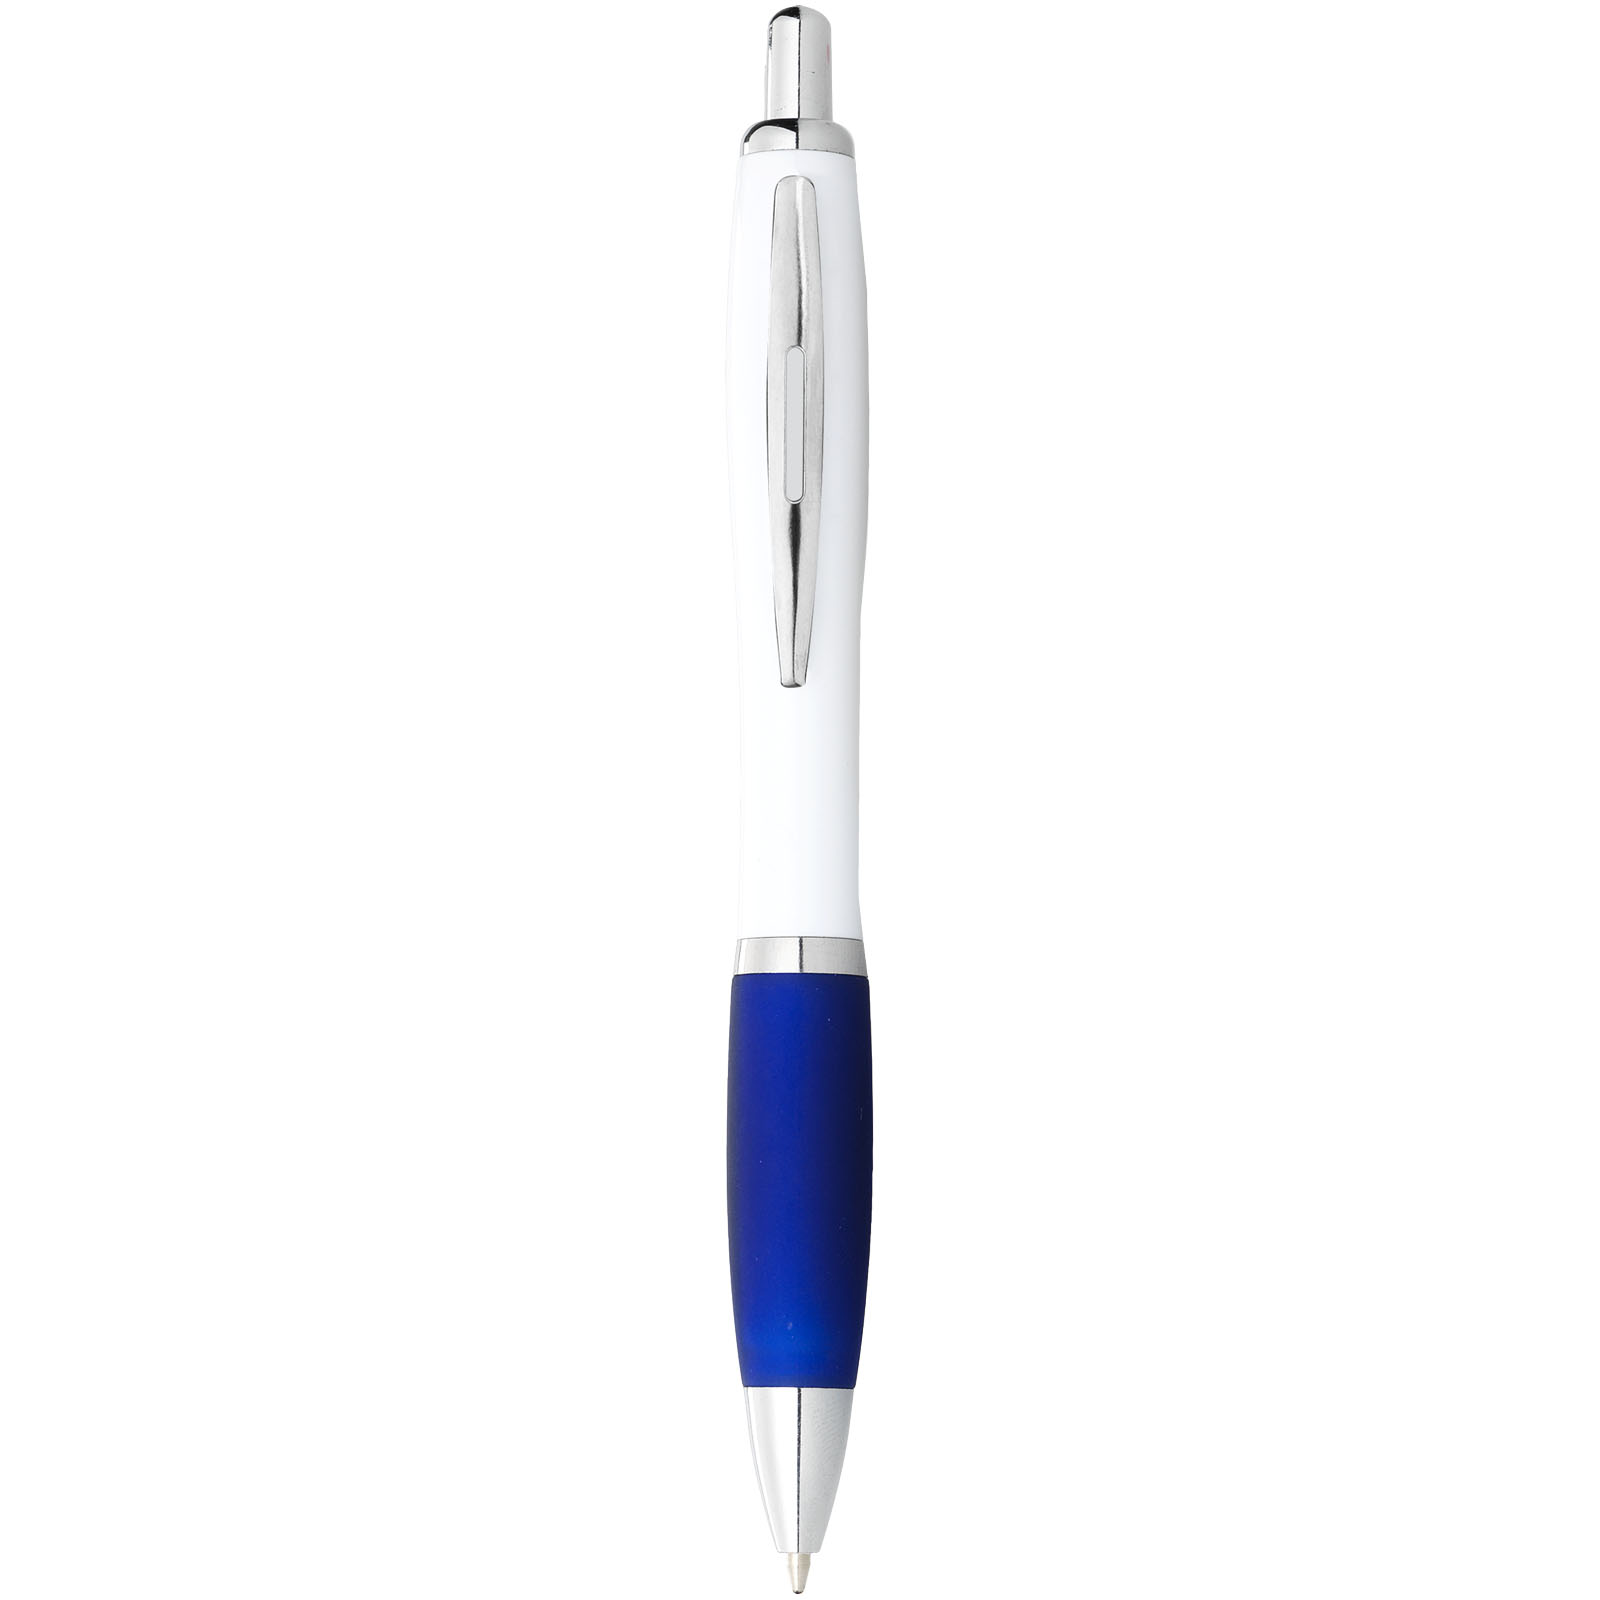 Advertising Ballpoint Pens - Nash ballpoint pen with white barrel and coloured grip